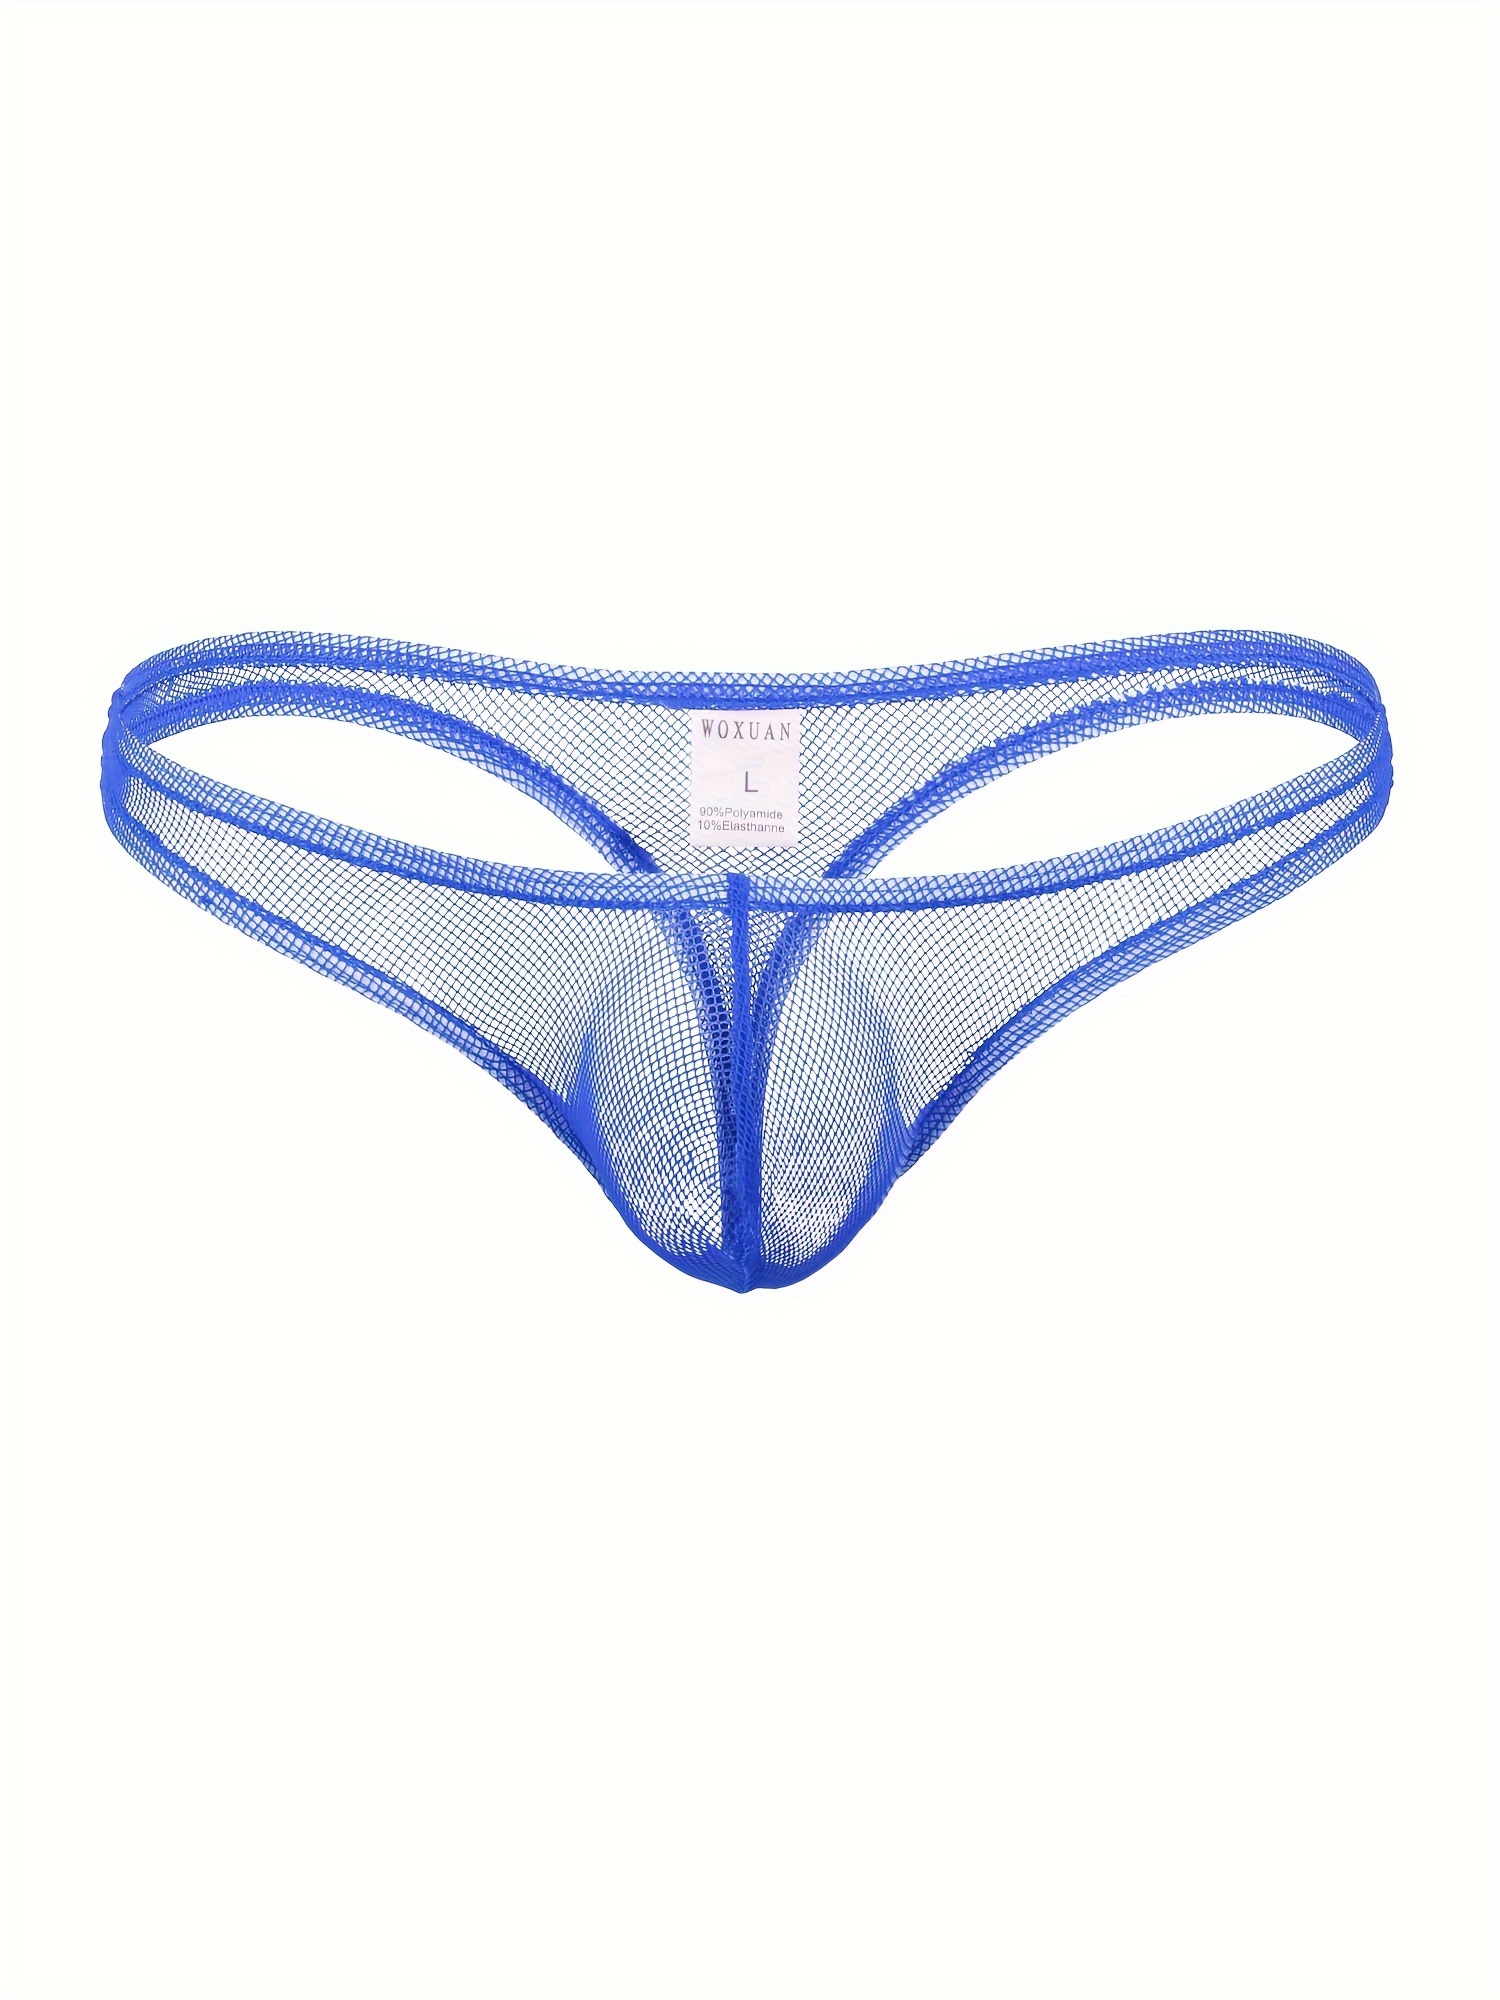 Men Sexy Jock Strap Underwear Briefs Underpants Panties Thong G-string